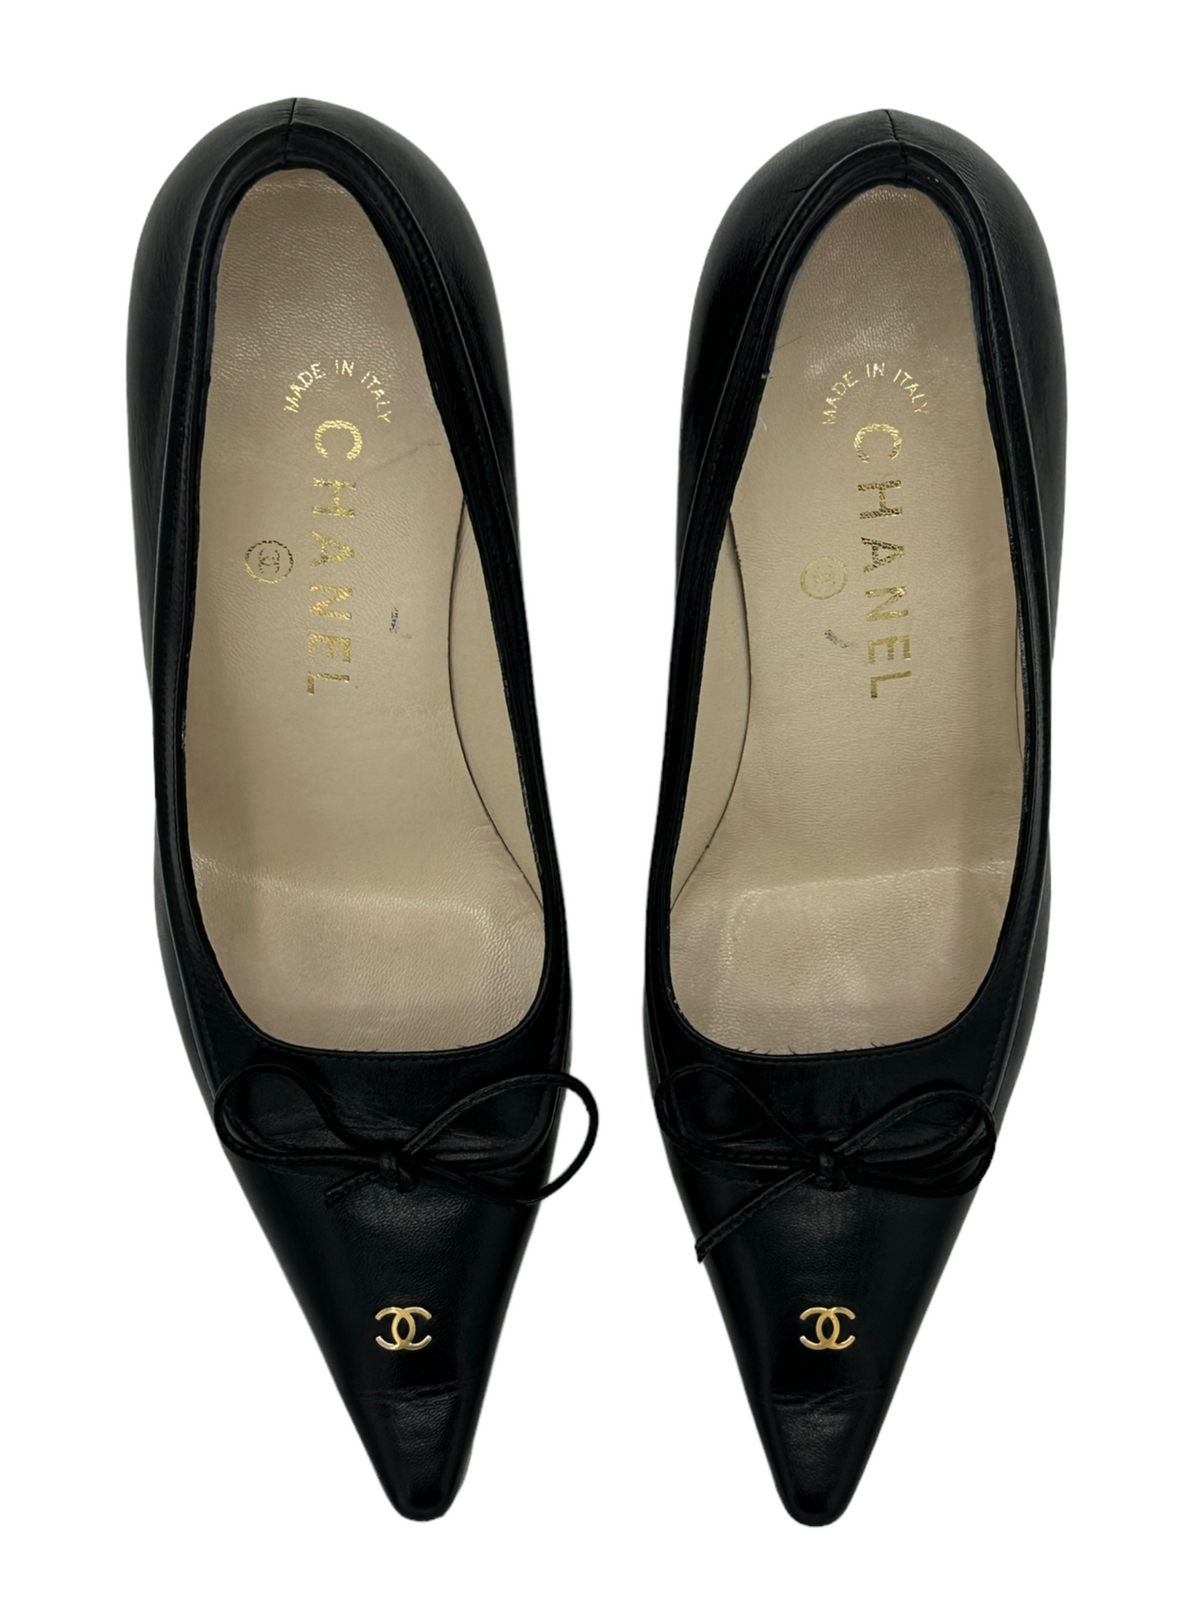 CHANEL, Shoes, Chanel Metallic Ballet Flats Resoled